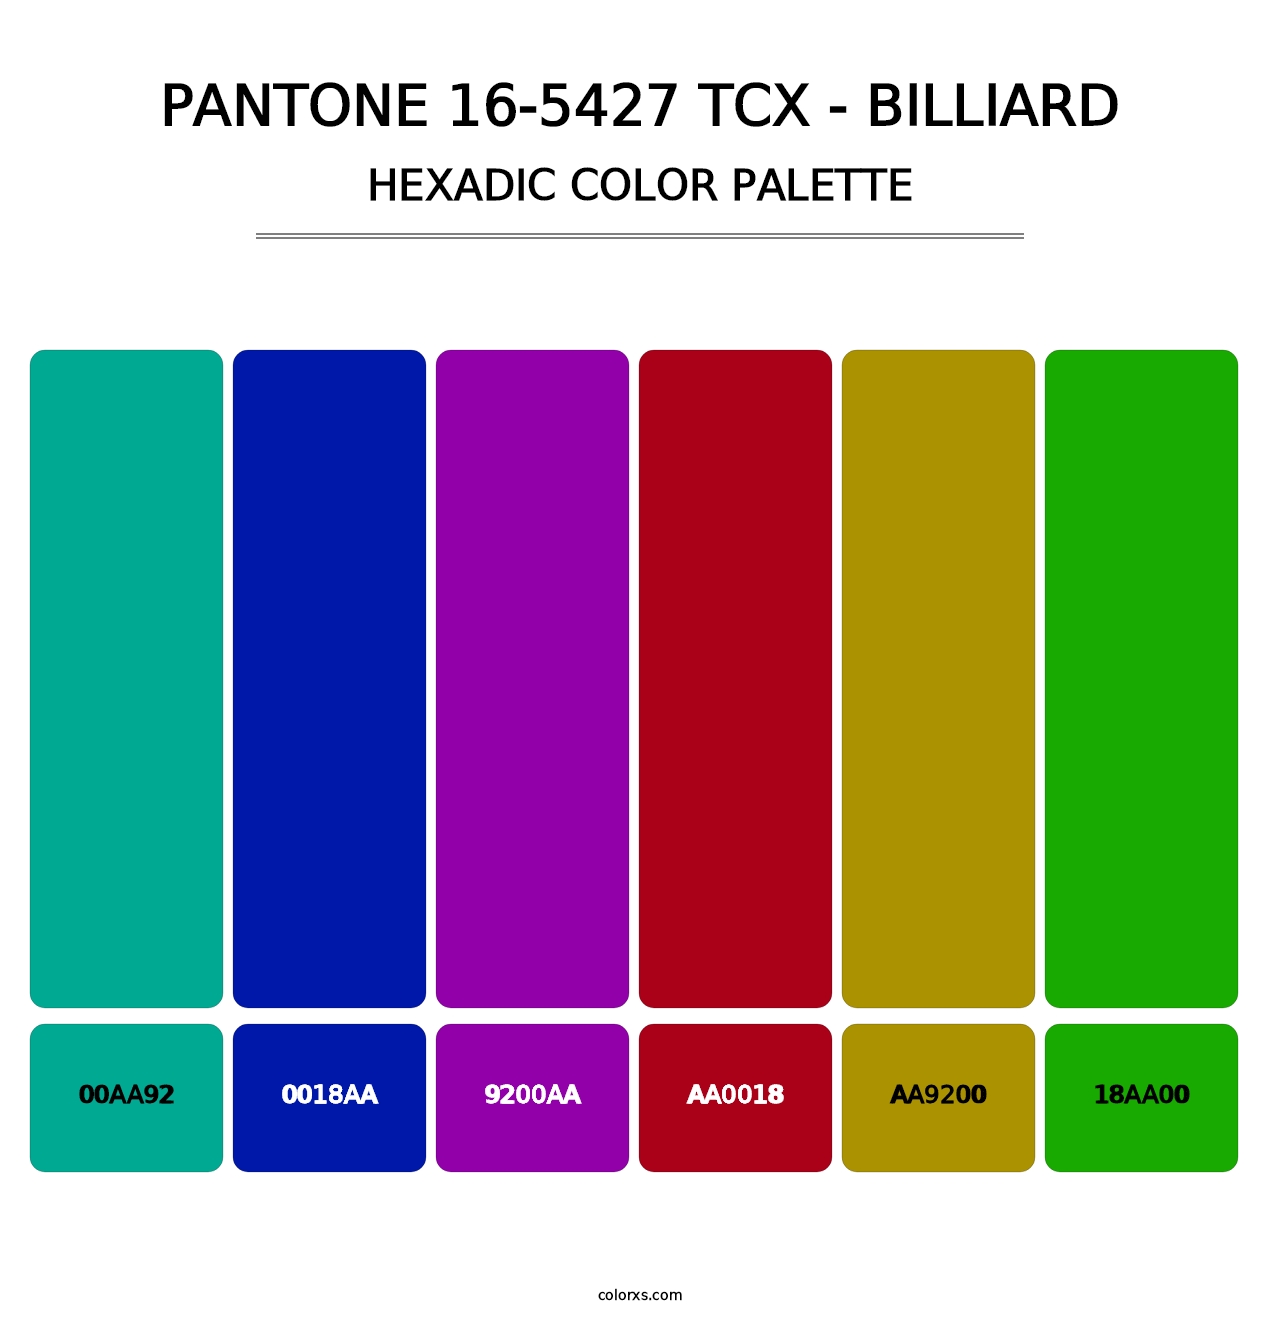 PANTONE 16-5427 TCX - Billiard - Hexadic Color Palette